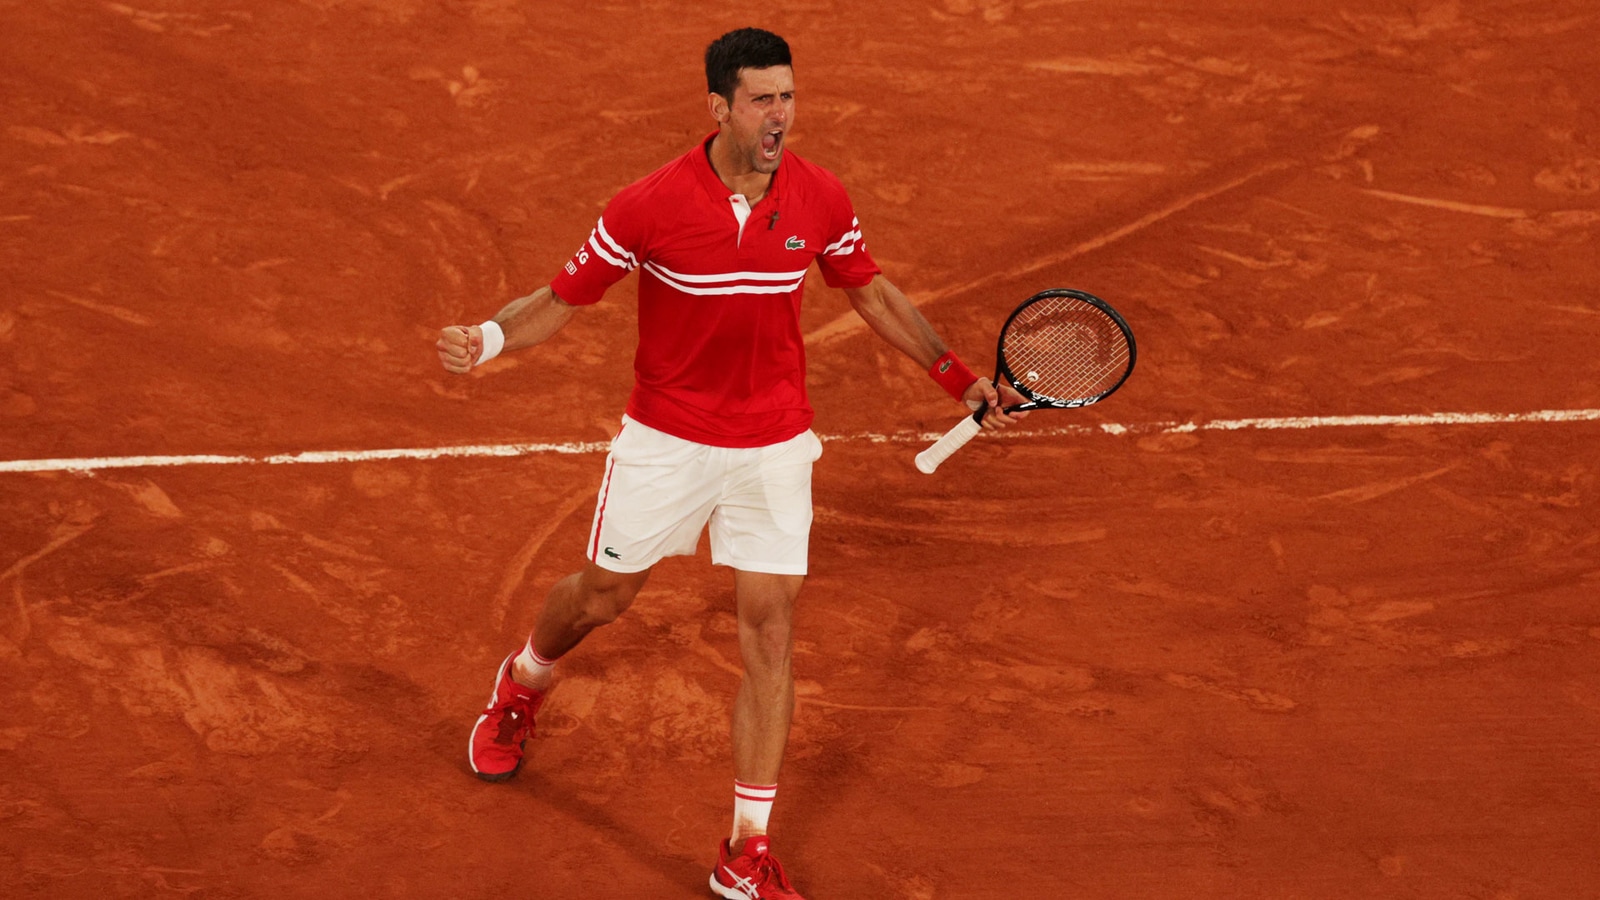 French Open 2021 Semi Finals Highlights: Novak Djokovic beats Rafael